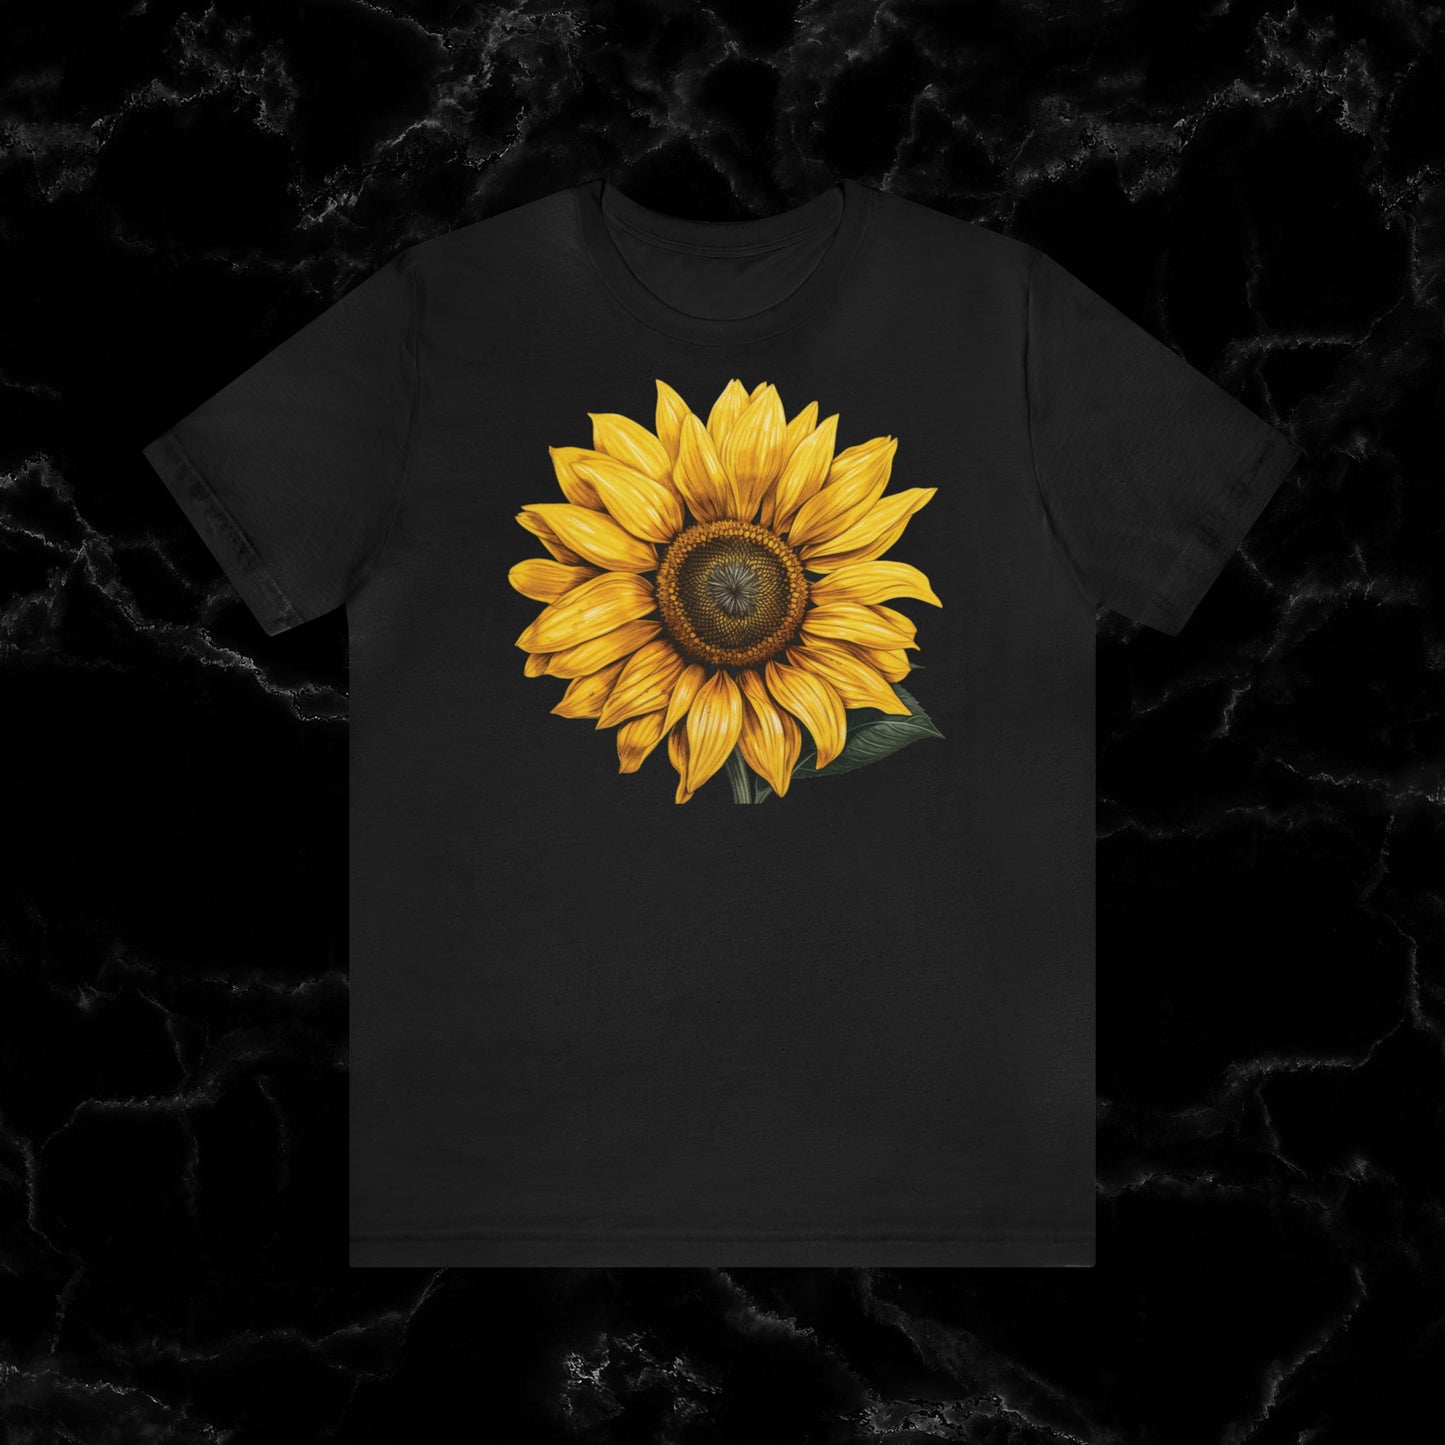 Sunflower Shirt Collection - Floral Tee, Garden Shirt, and Women's Fall Fashion Staples T-Shirt Black S 